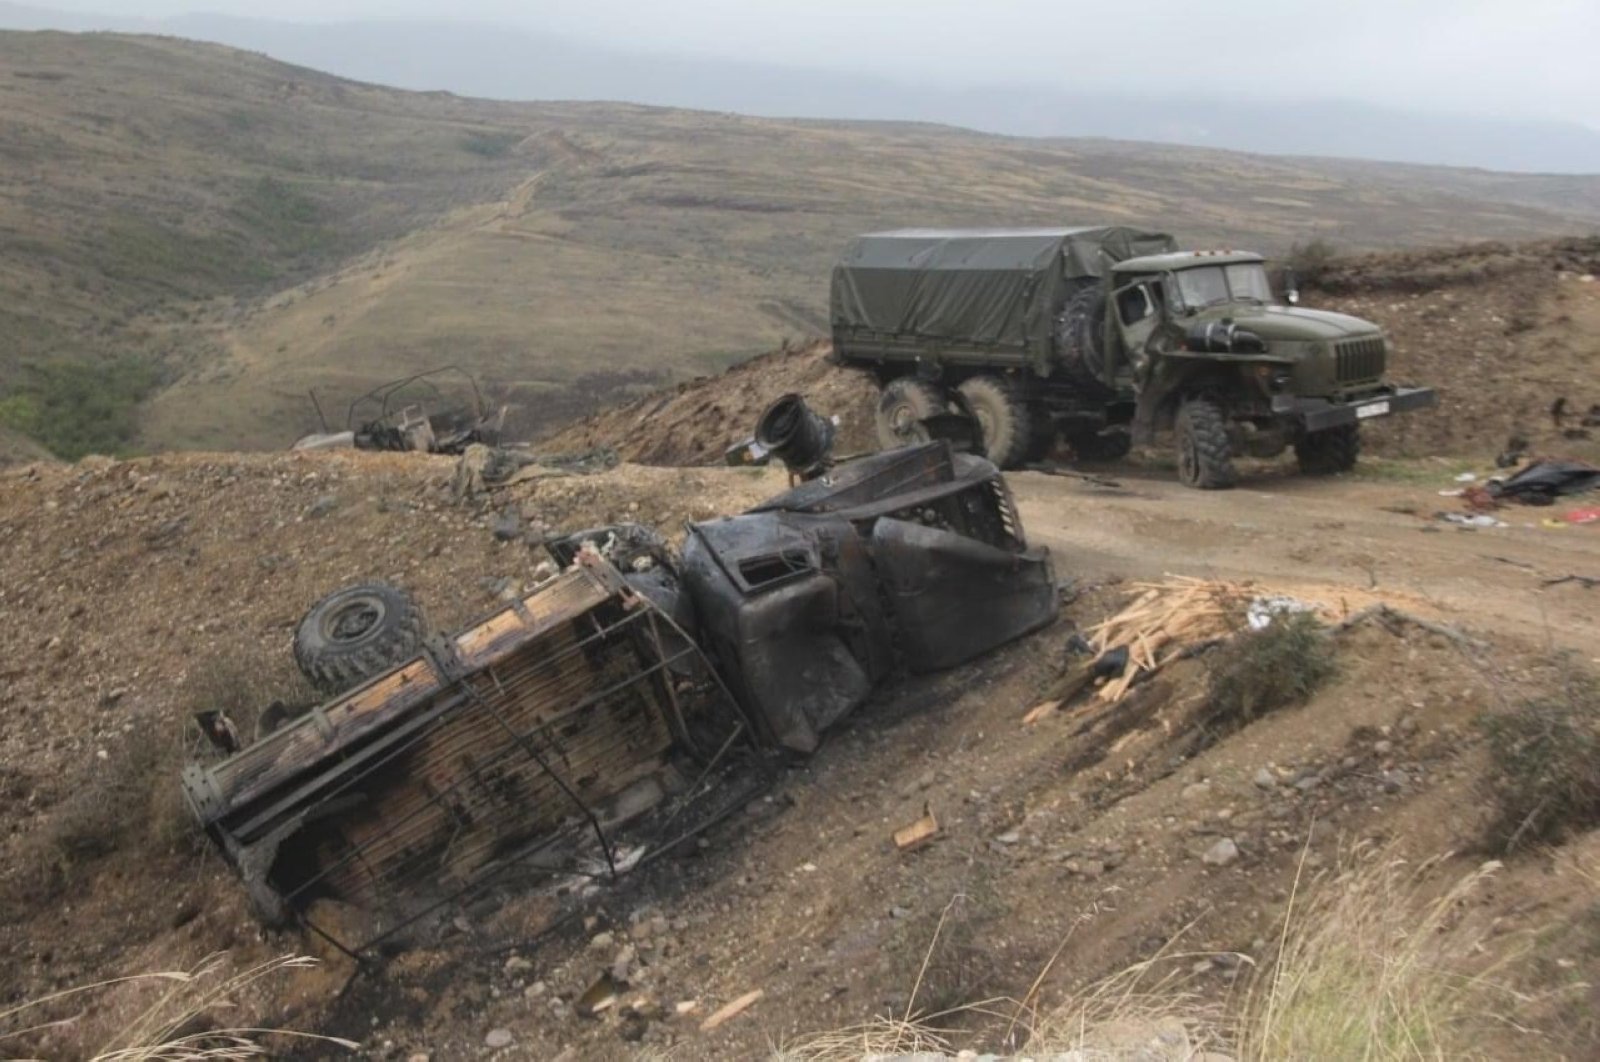 Armenian military vehicles damaged after Azerbaijan's retaliatory operations in response to Armenia's attacks in the occupied Nagorno-Karabakh region, Oct. 2, 2020. (AA Photo)